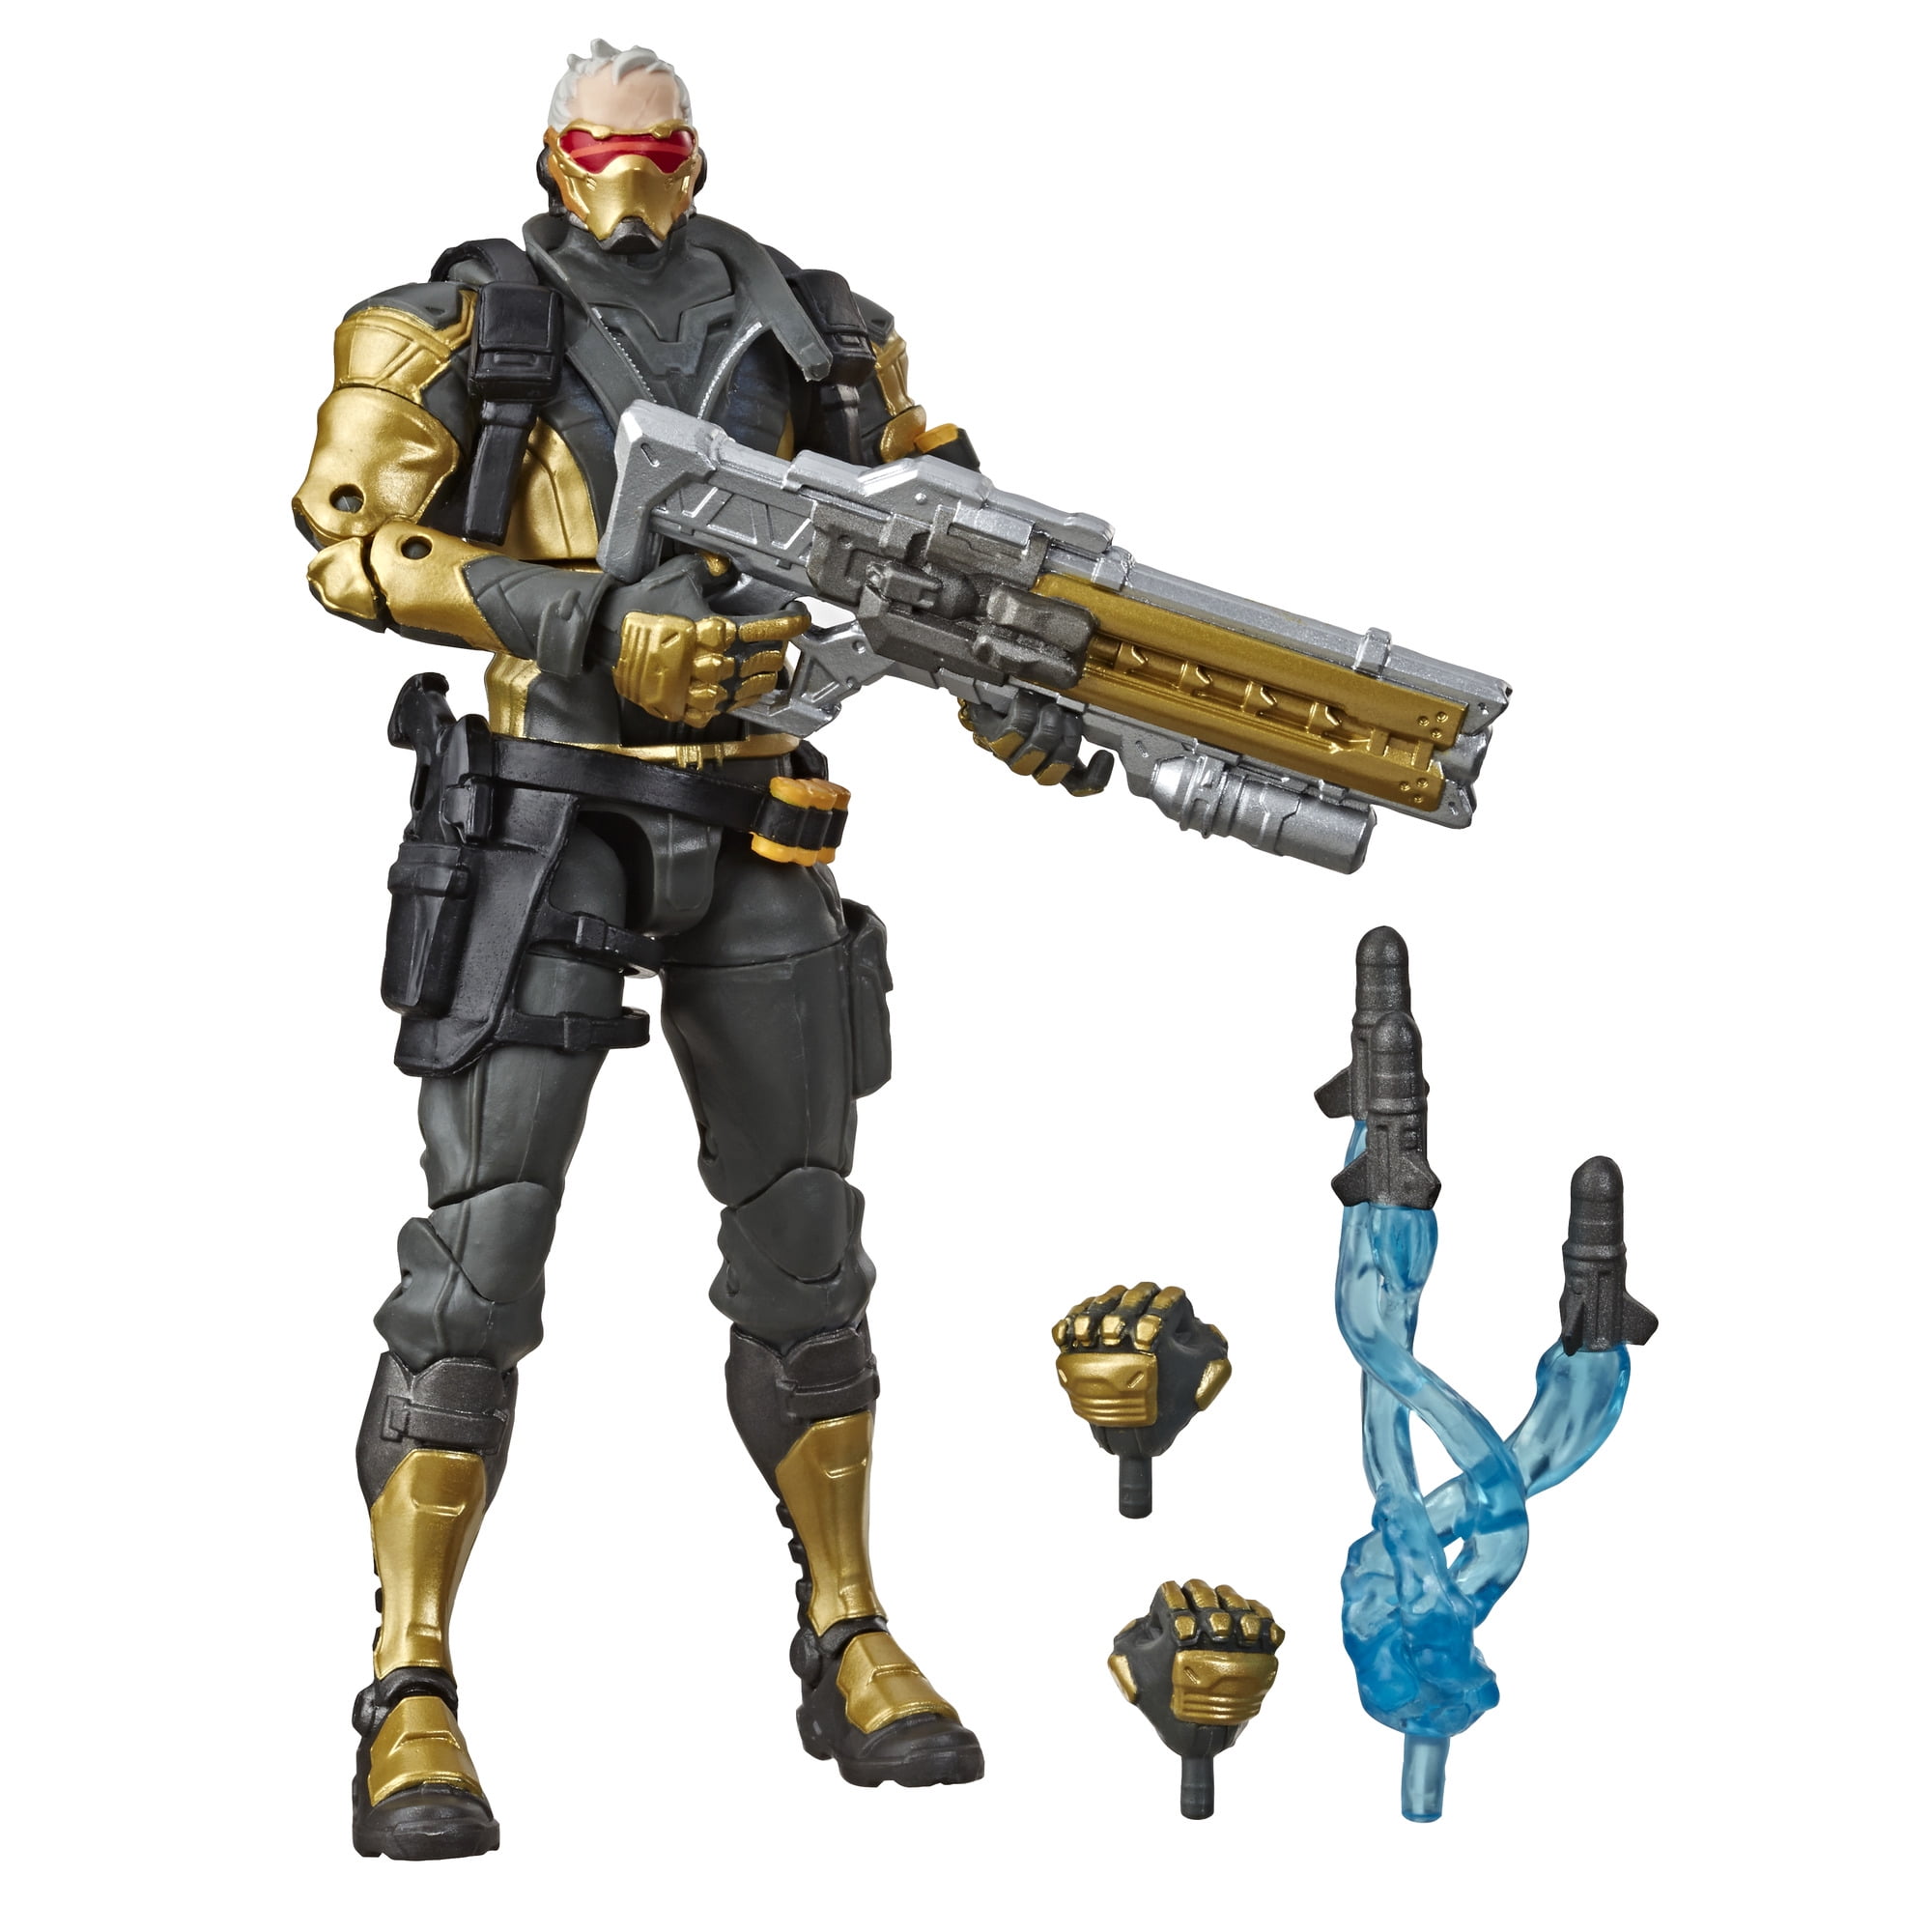 Overwatch Ultimates Series Soldier: 76 (Golden) Skin 6-Inch Figure